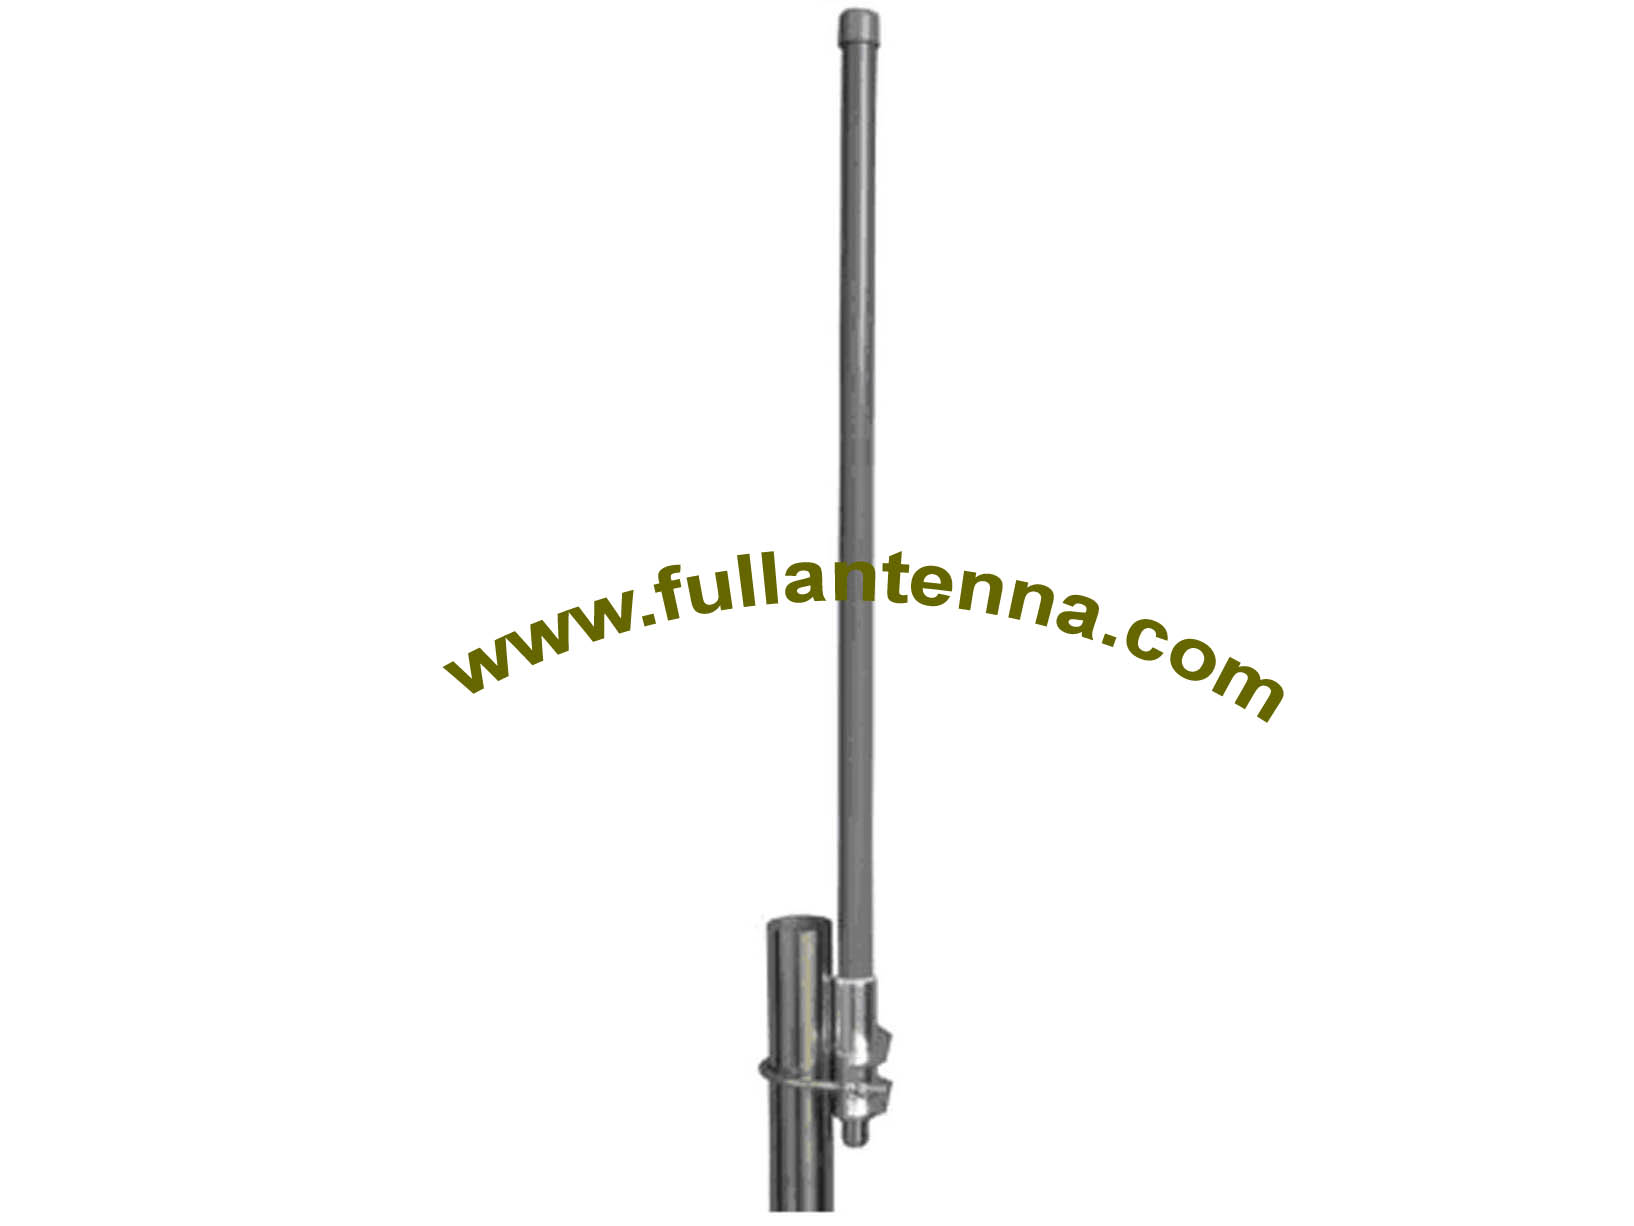 P / N: FAQ24.F12, antena externa WiFi / 2.4G, antena de fibra de vidrio de montaje en pared 12dbi